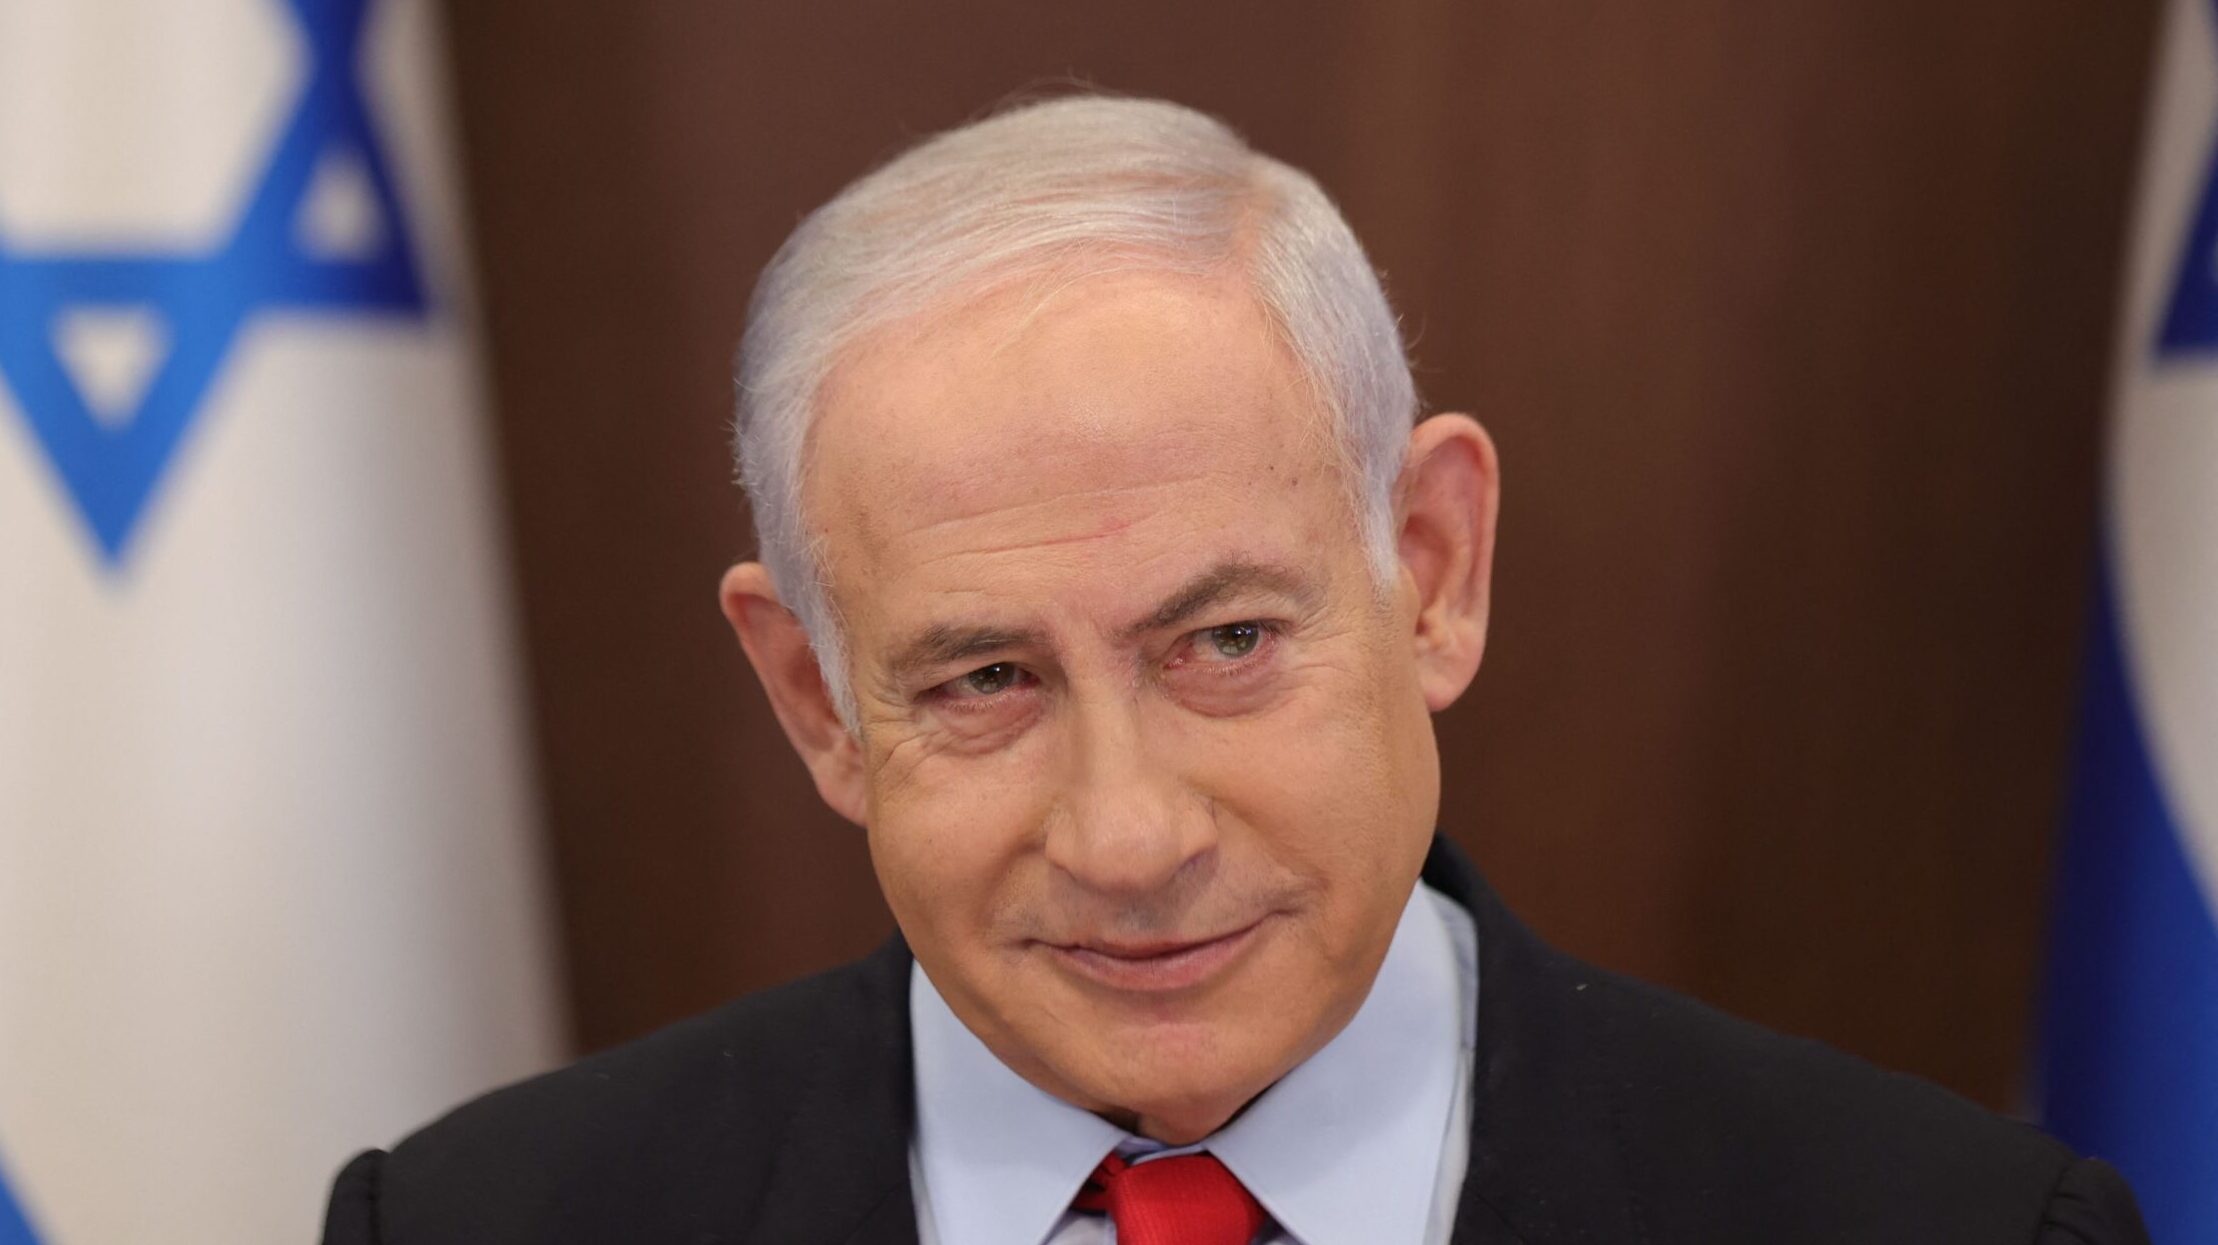 Netanyahu Rejects Hamas’ ‘Delusional’ Demands in Truce Talks, Stresses Direct Negotiations